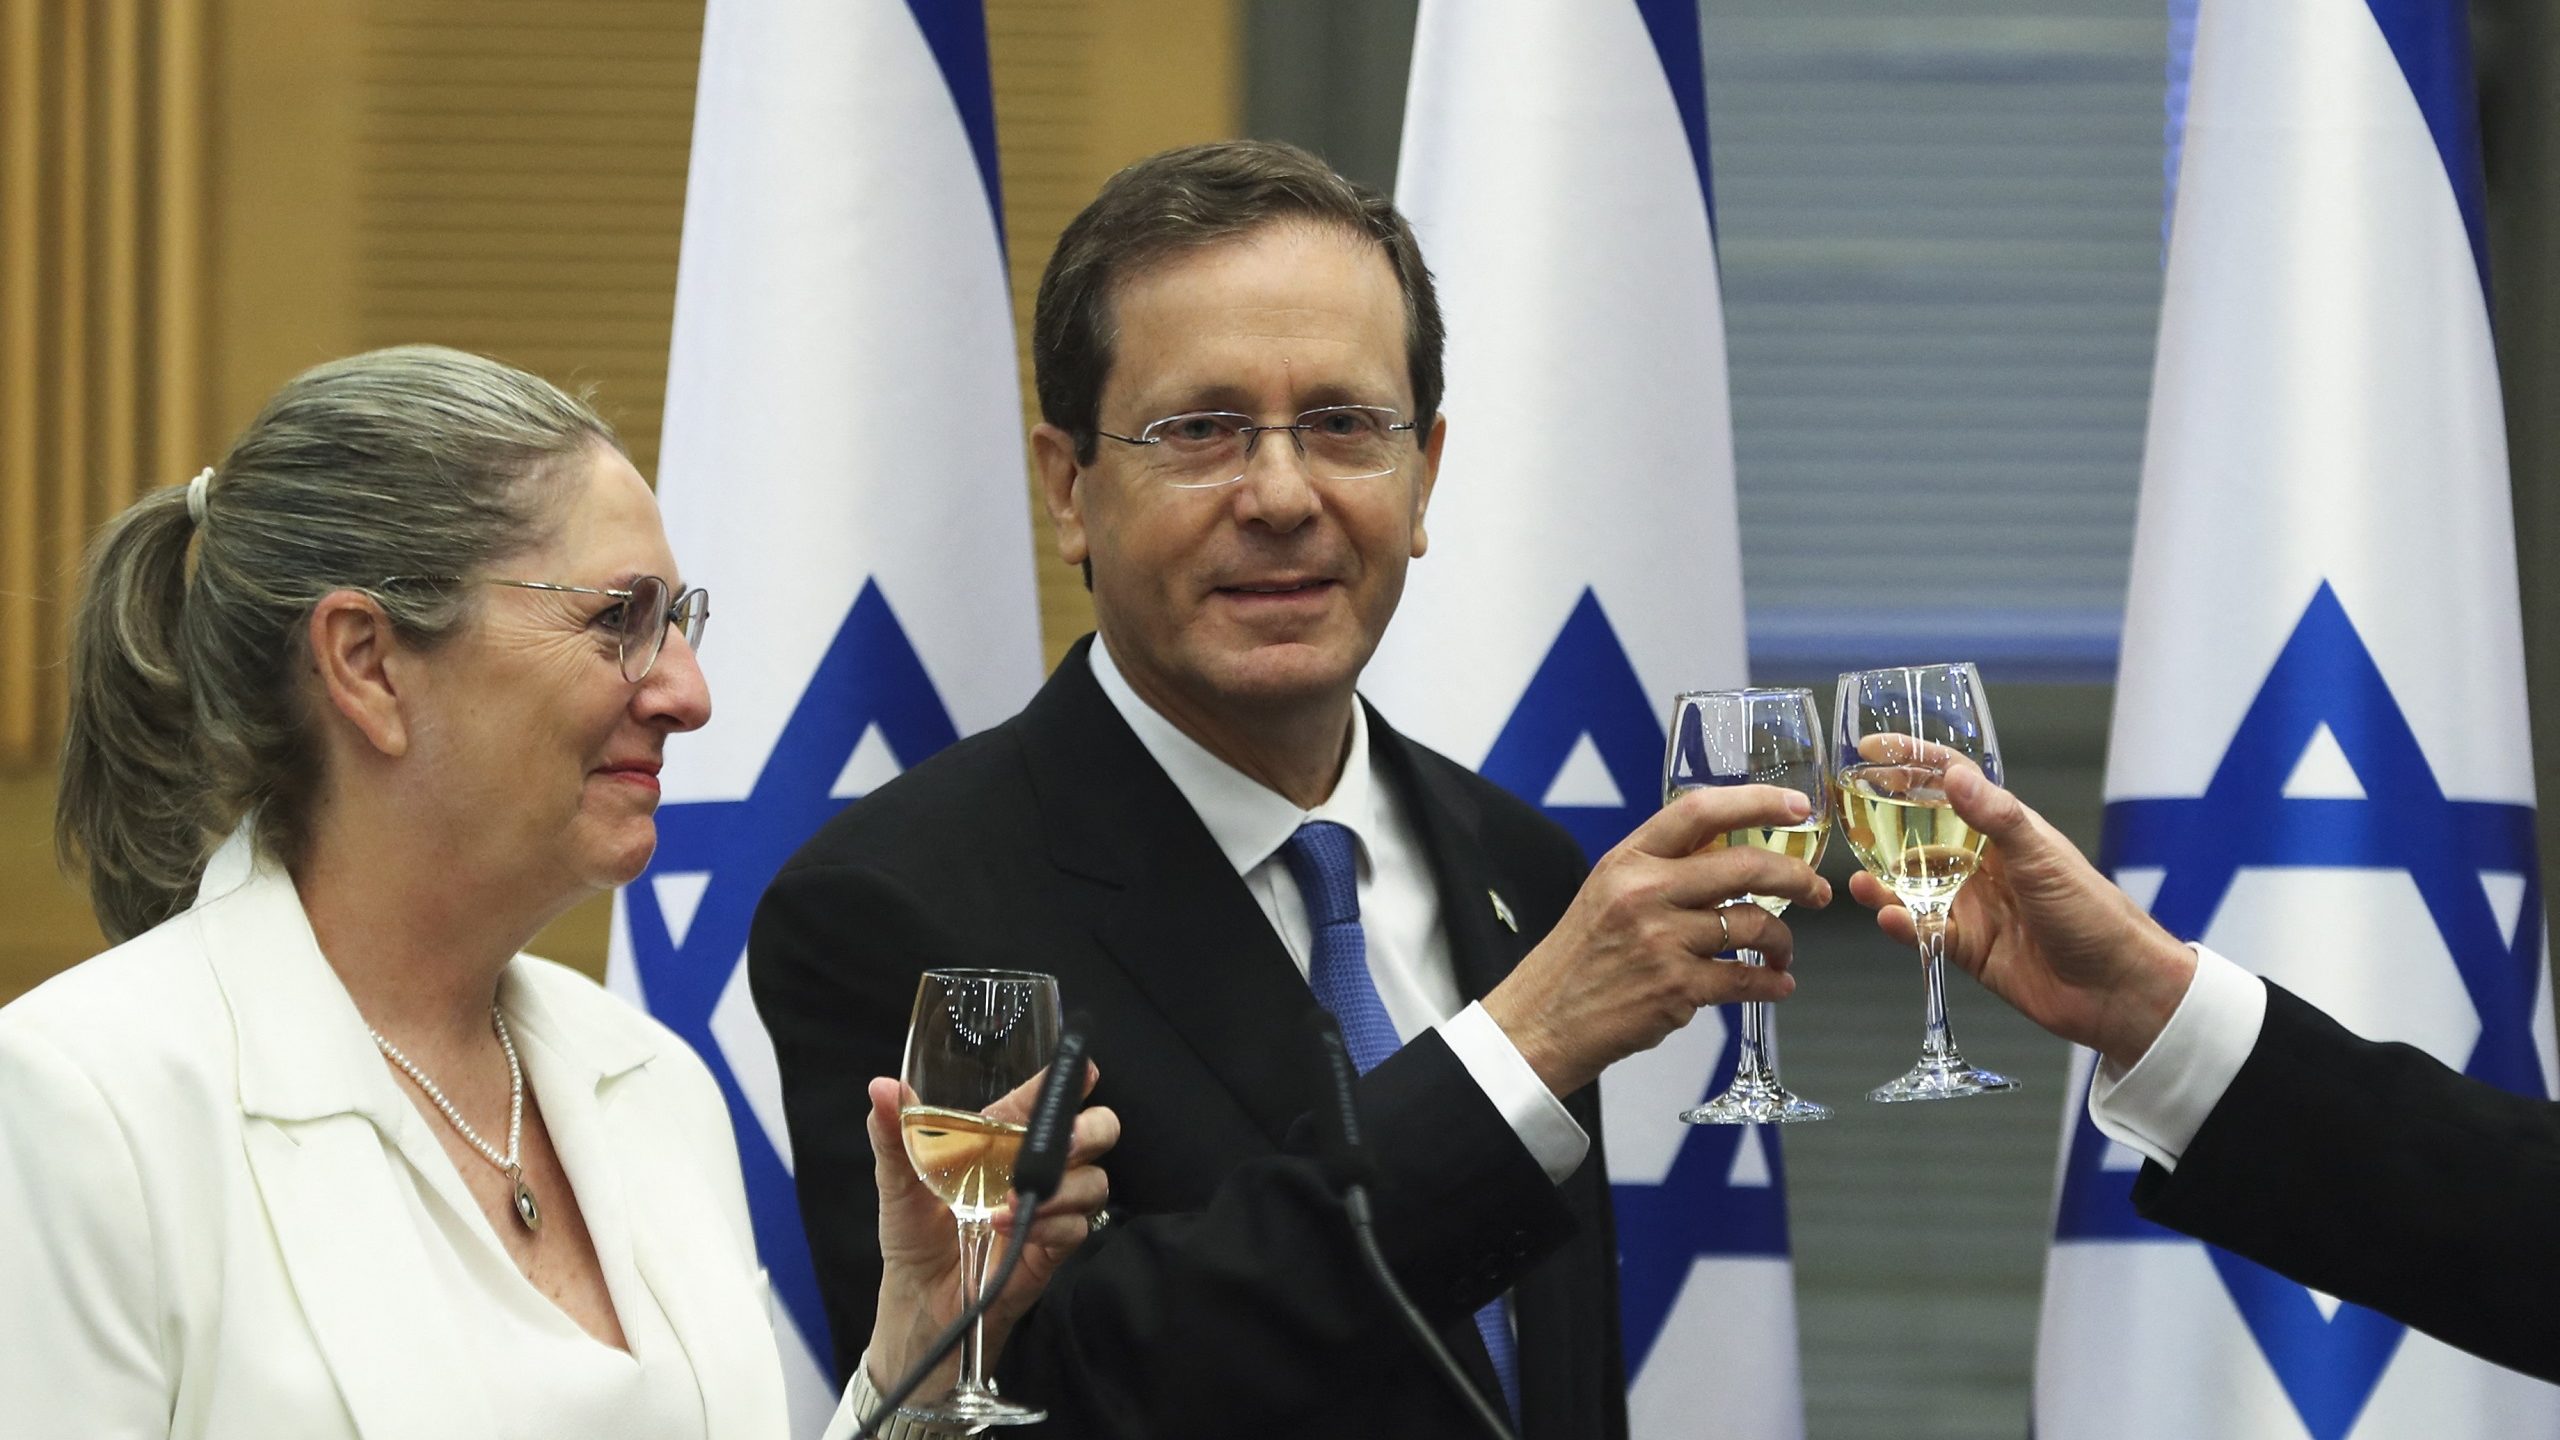 Isaac Herzog Sworn in as Israel’s 11th President